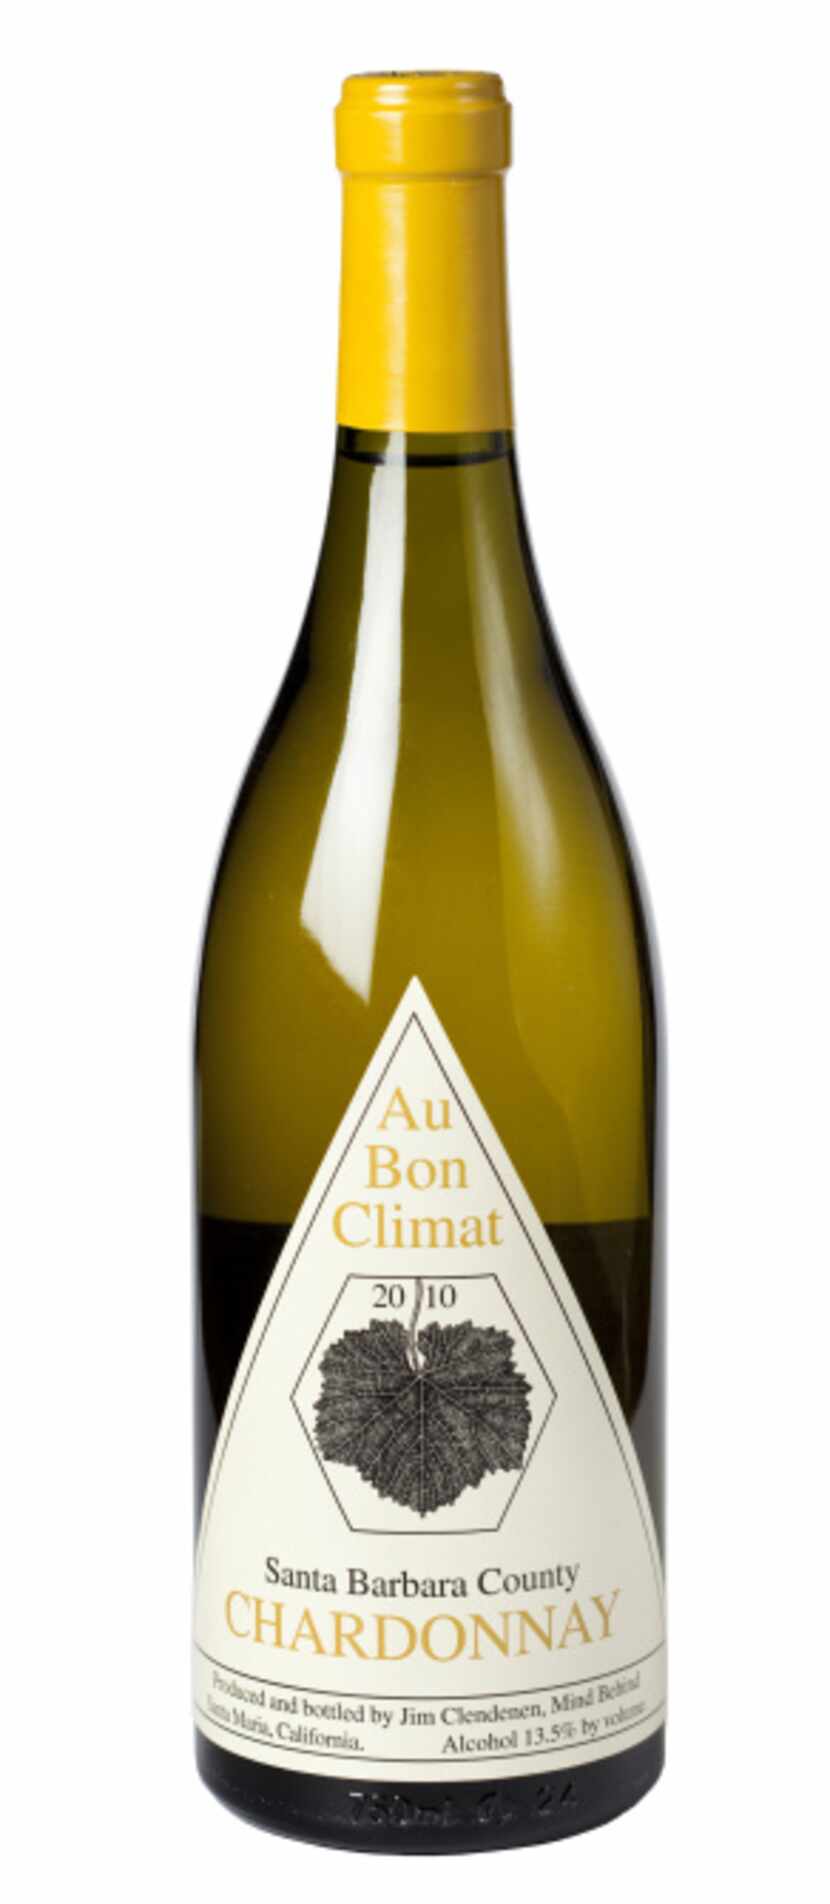 Au Bon Climat 2010 Chardonnay